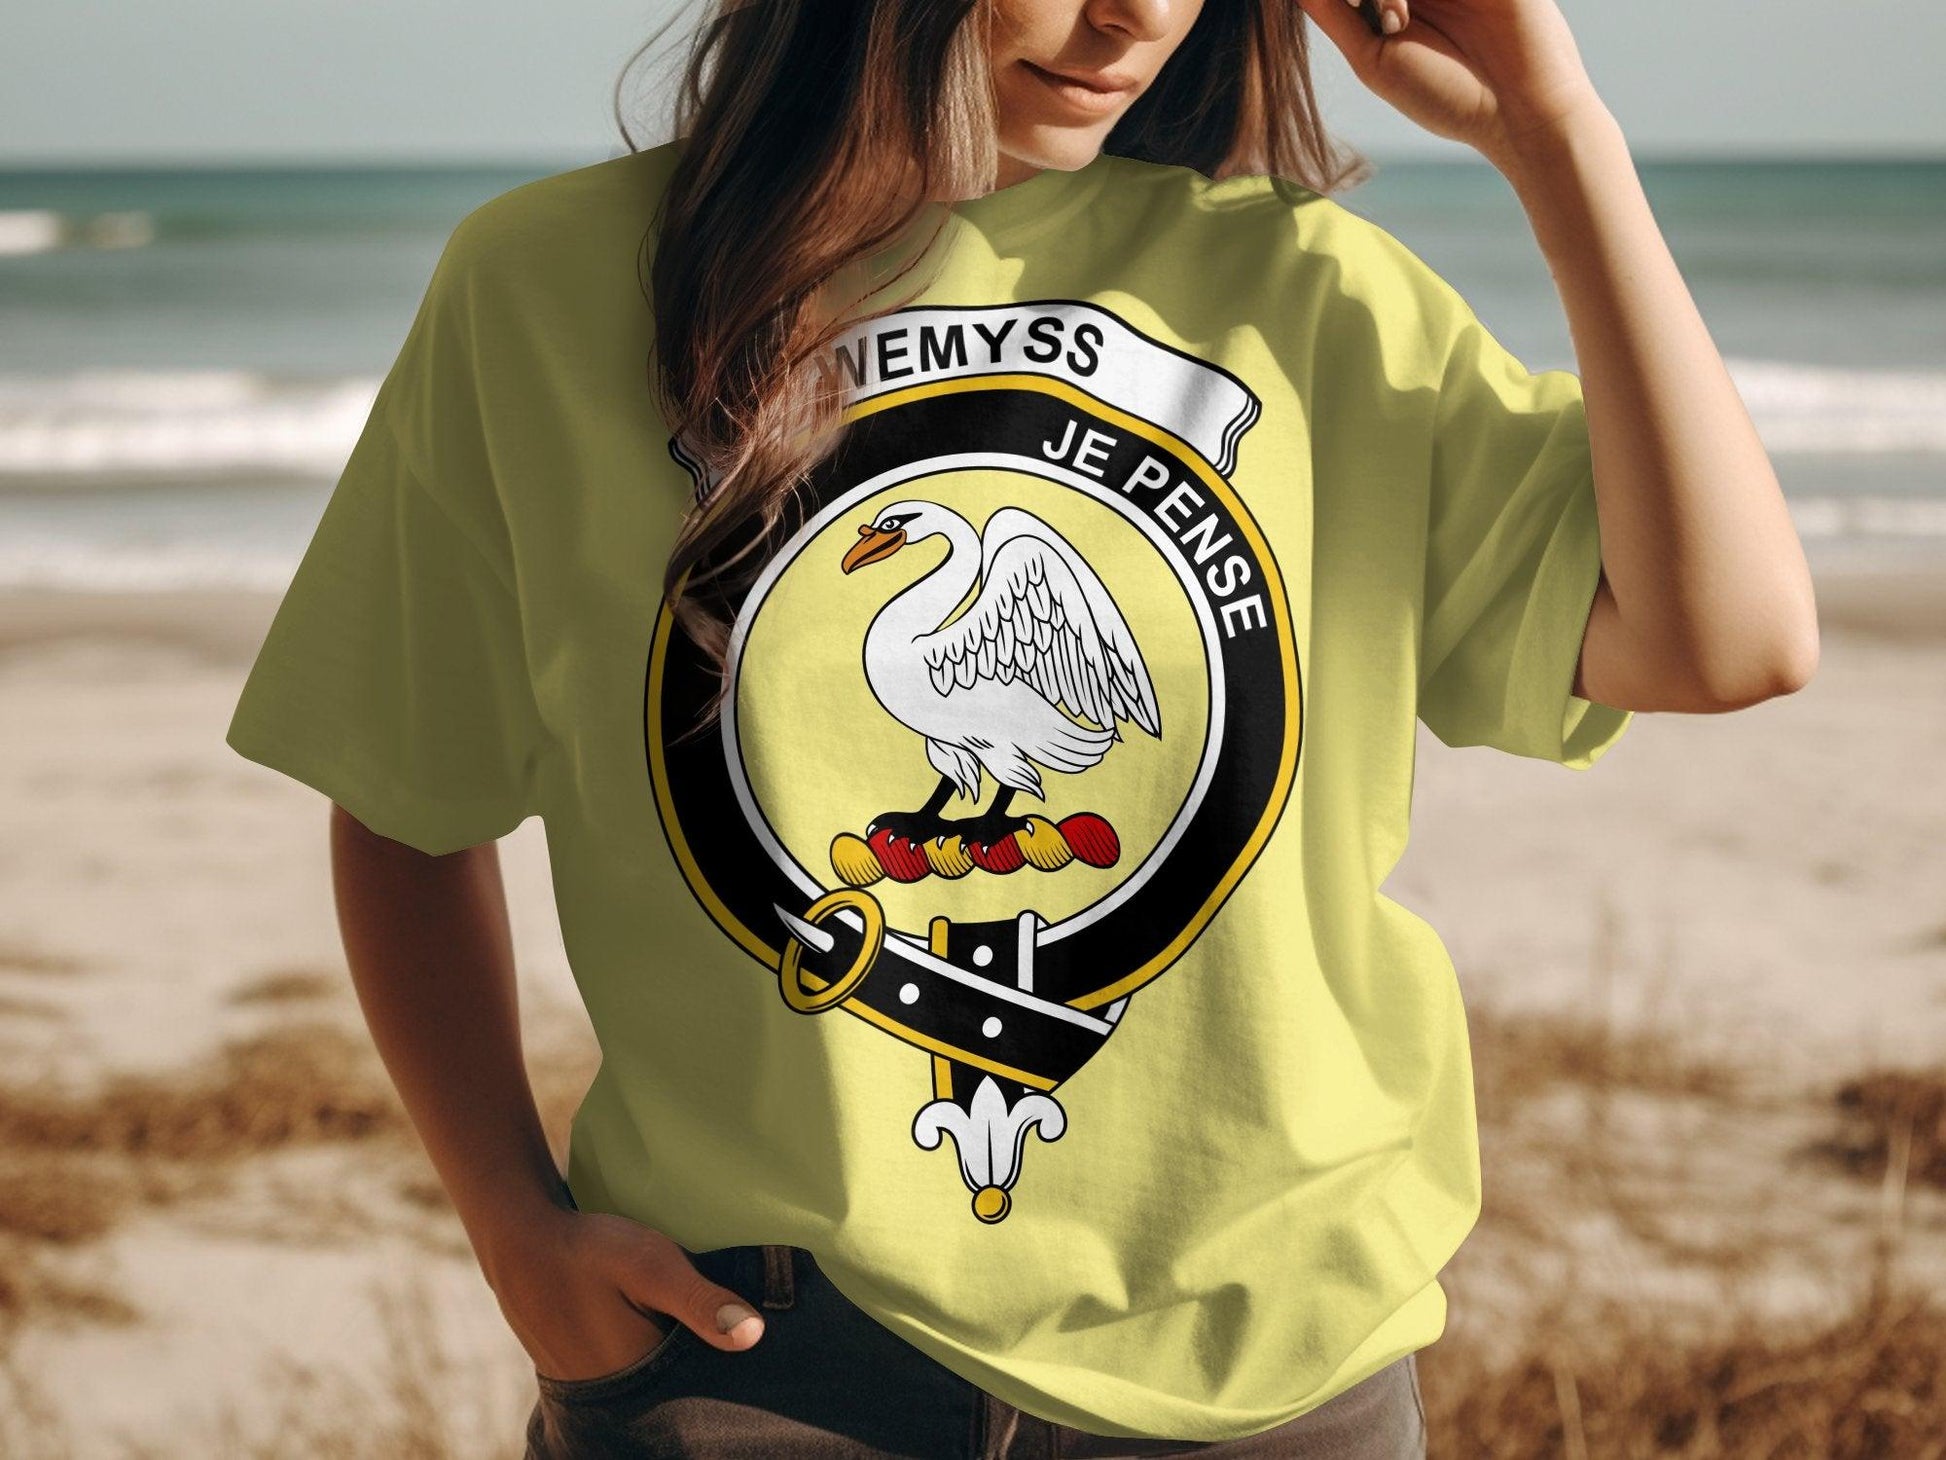 Elegant Wemyss Clan Crest Design Scottish Themed T-Shirt - Living Stone Gifts